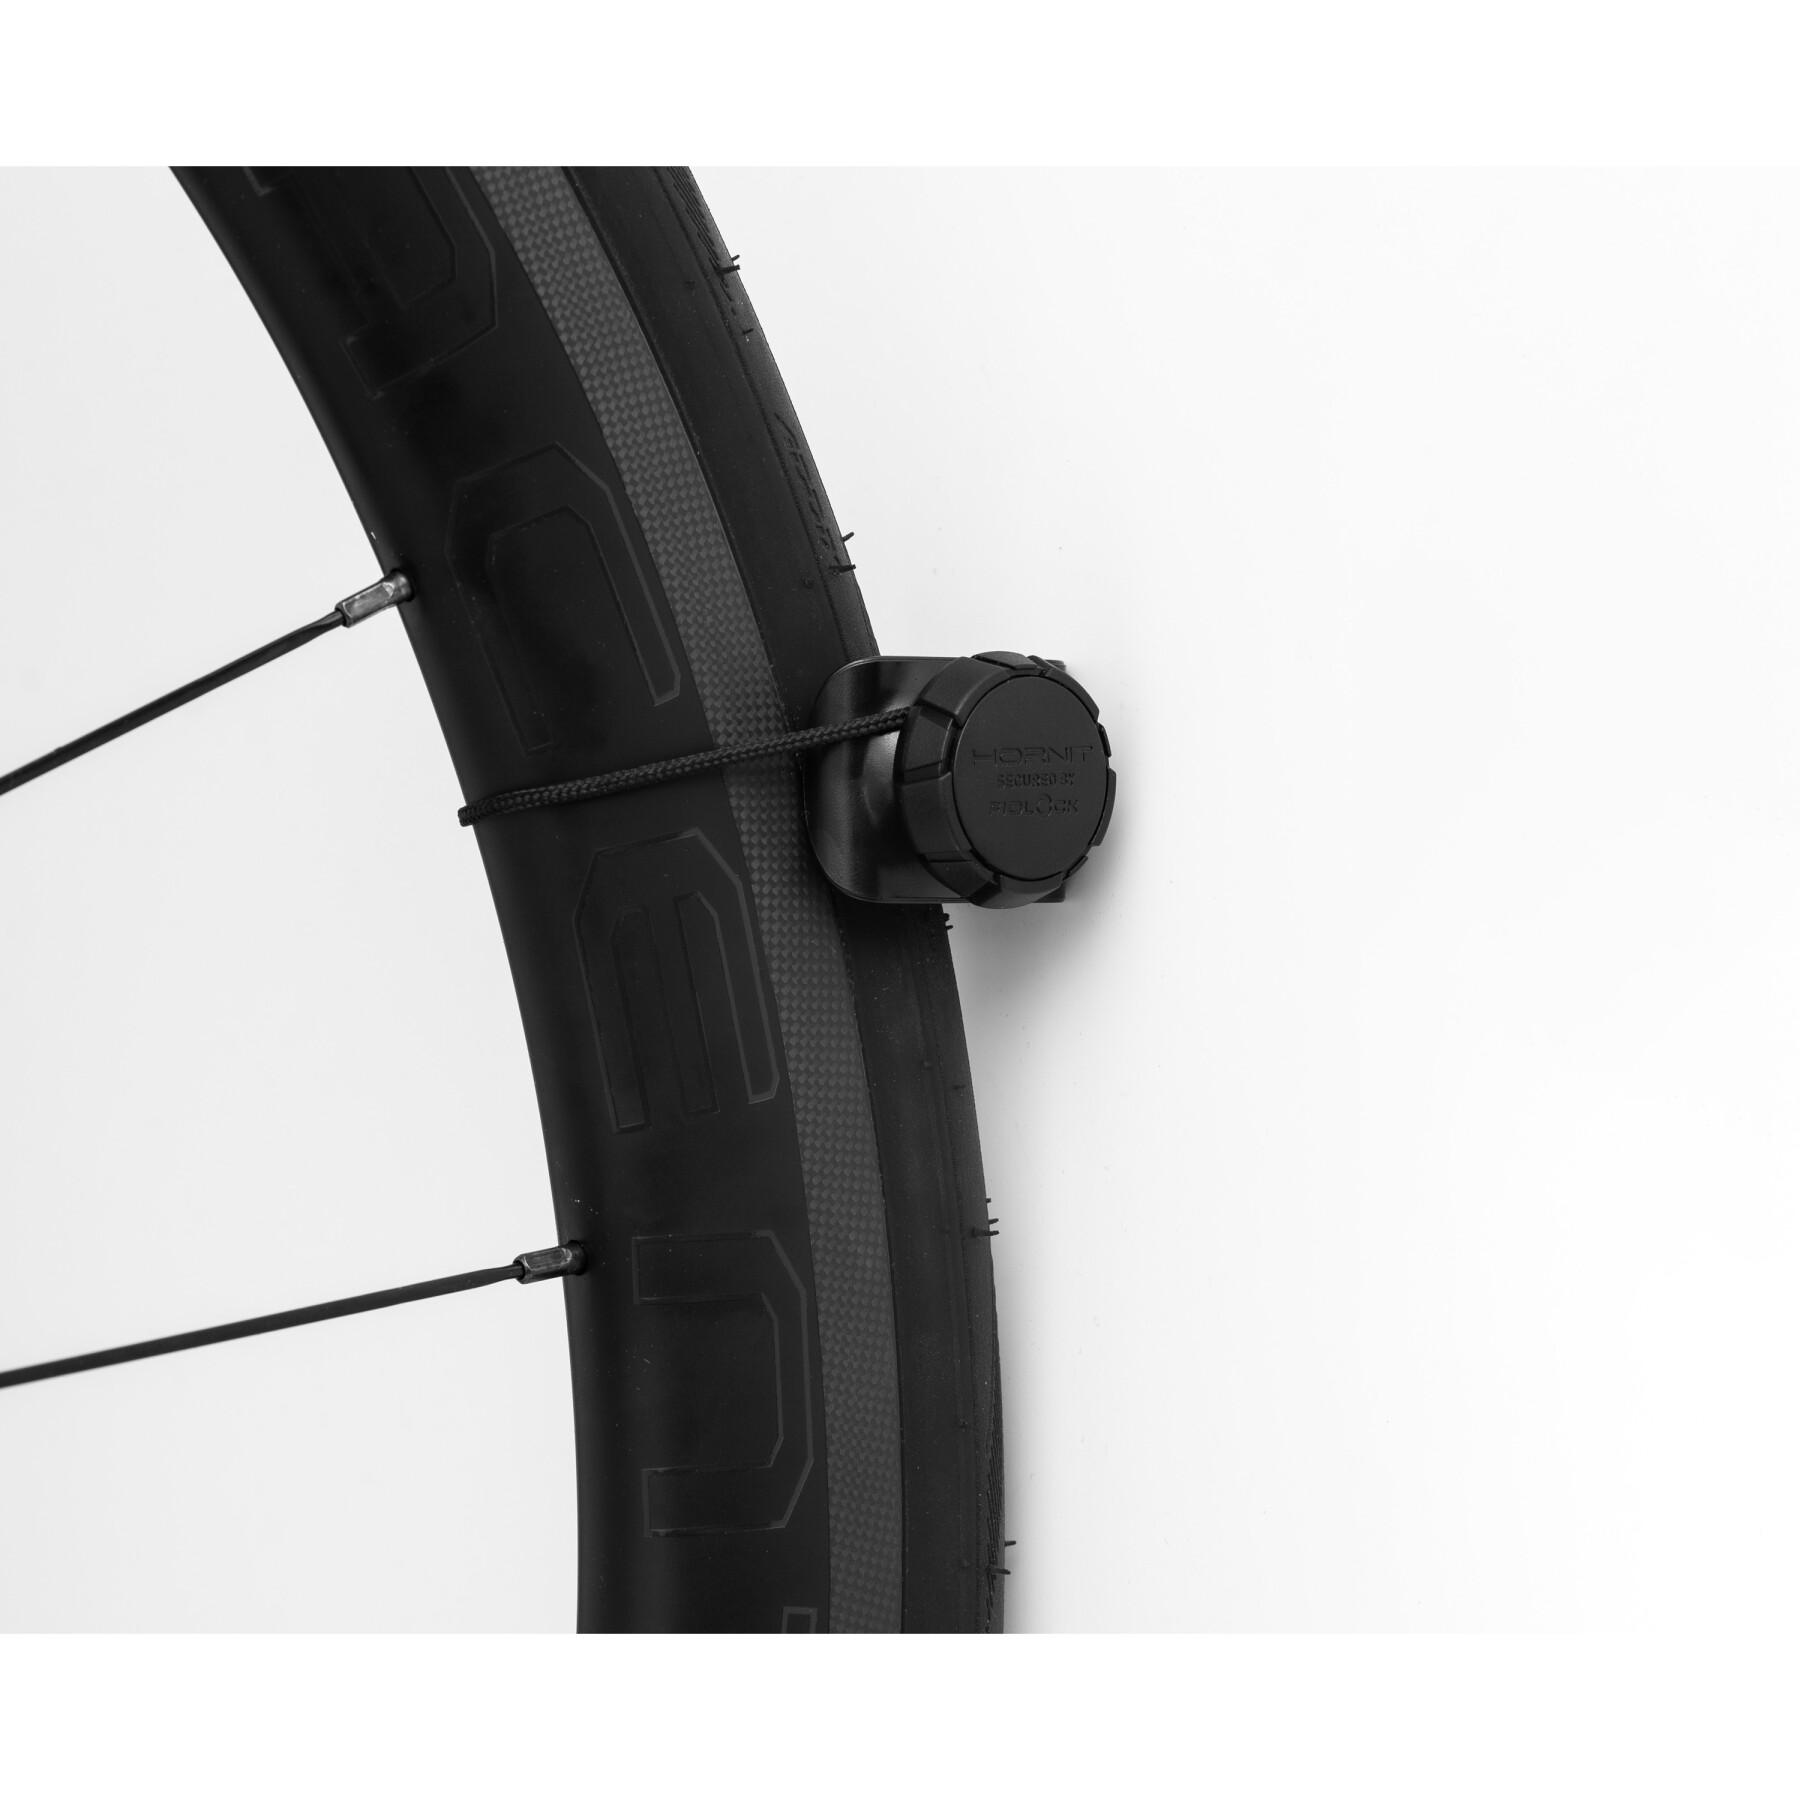 Cykelhållare Hornit Clug Pro - Roadie